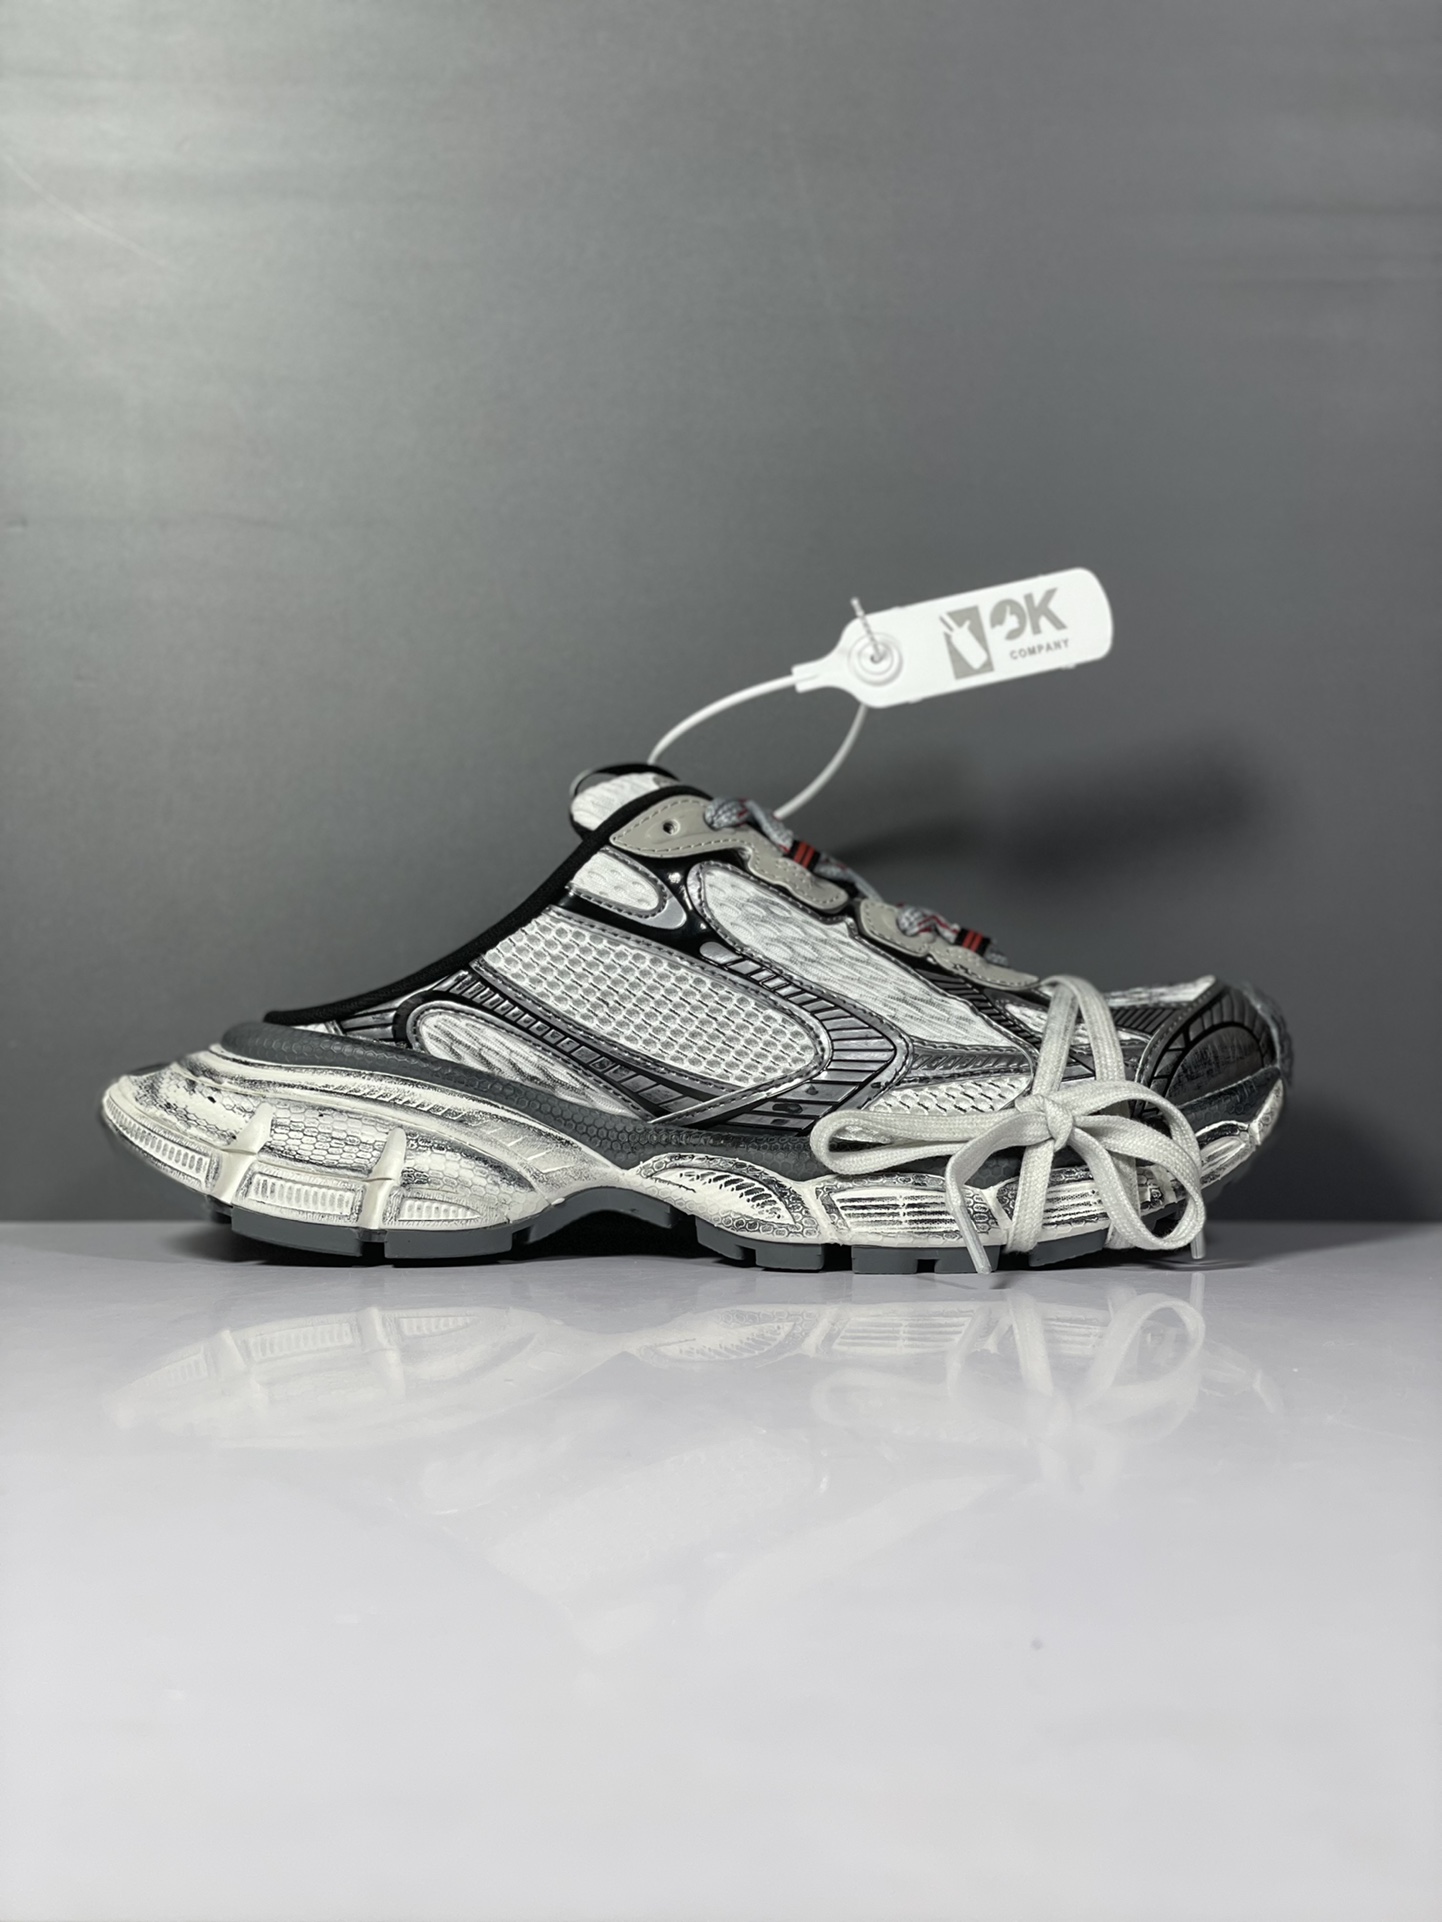 【OK扫描版本】Balenciaga Phantom Sneaker 官方同步 巴黎世家全新3XL潮流跑鞋 增加全新设计 在延续 Track Trainer 户外轮廓和复杂鞋面结构的同时，新版本在后跟位置增加了透明带的部件尺码：35 36 37 38 39 40 41 42 43 44 45 46